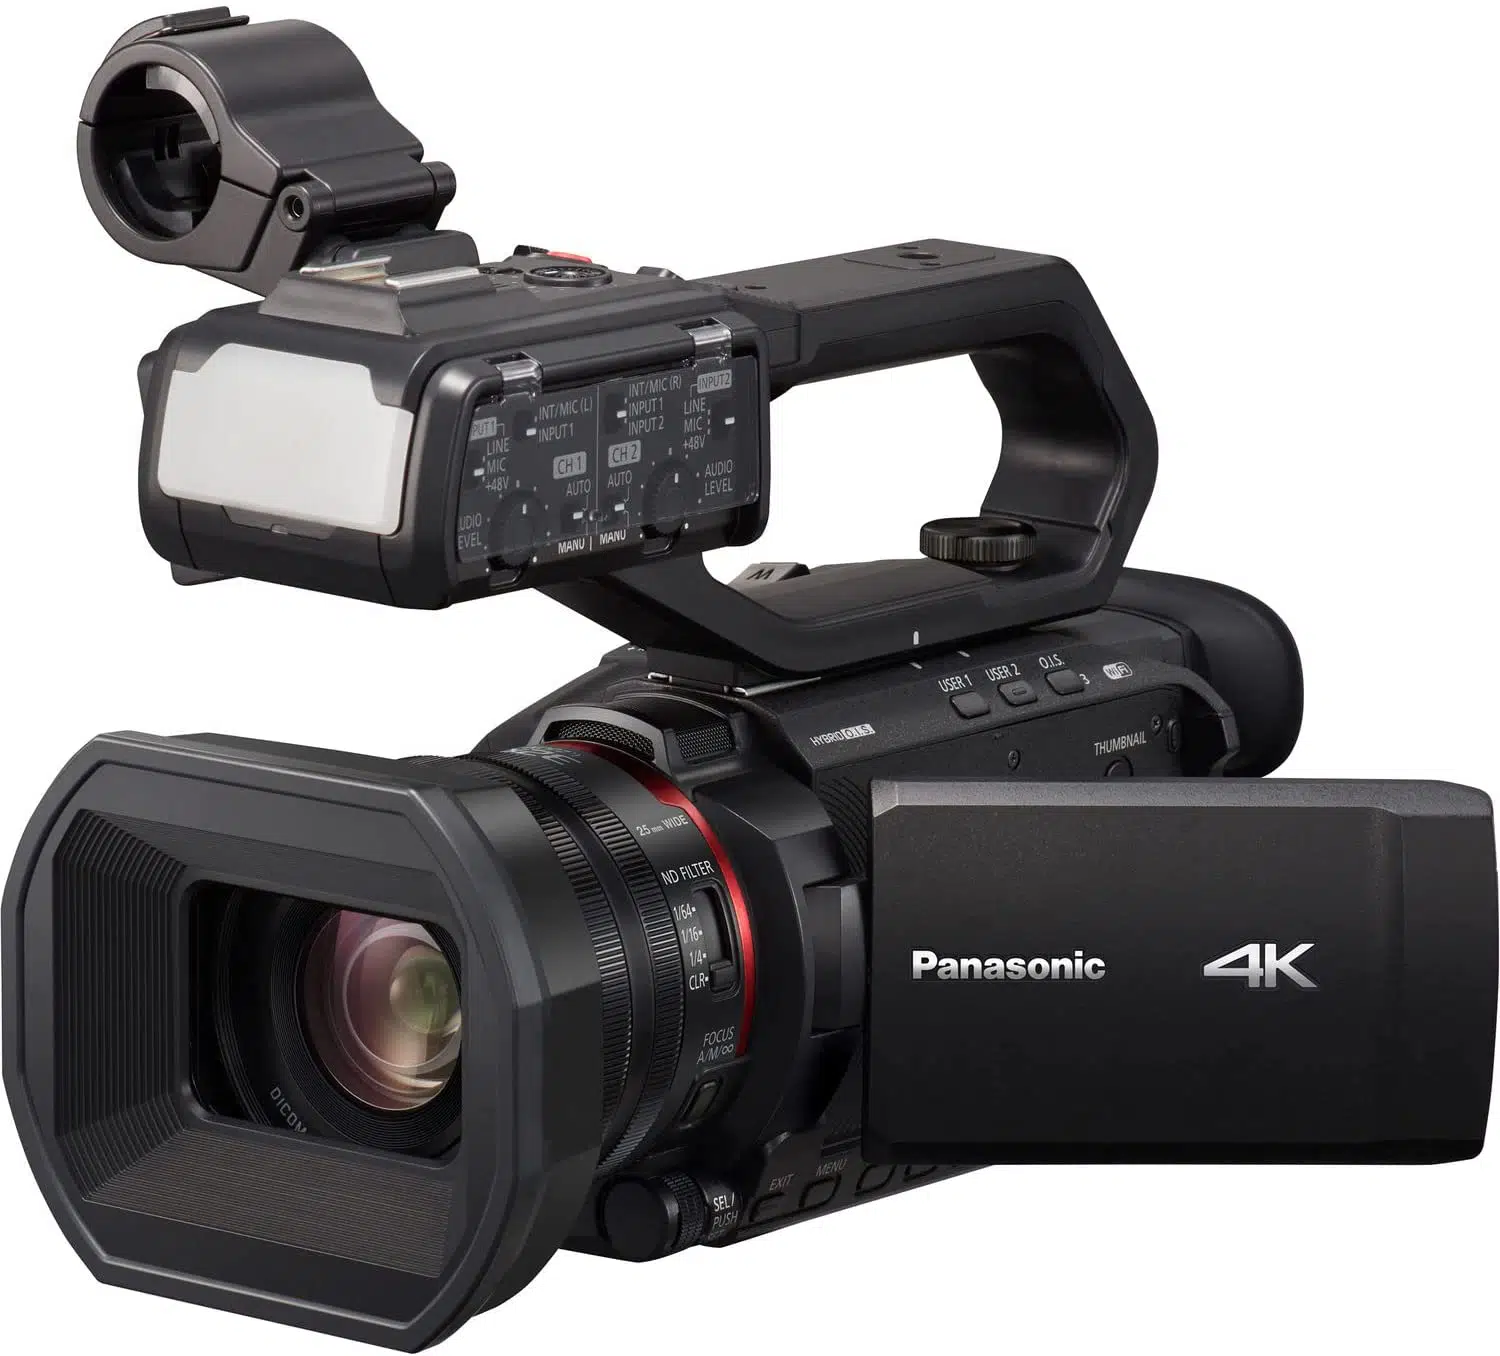 Panasonic HC-V770 Review: Budget Video, Premium Features